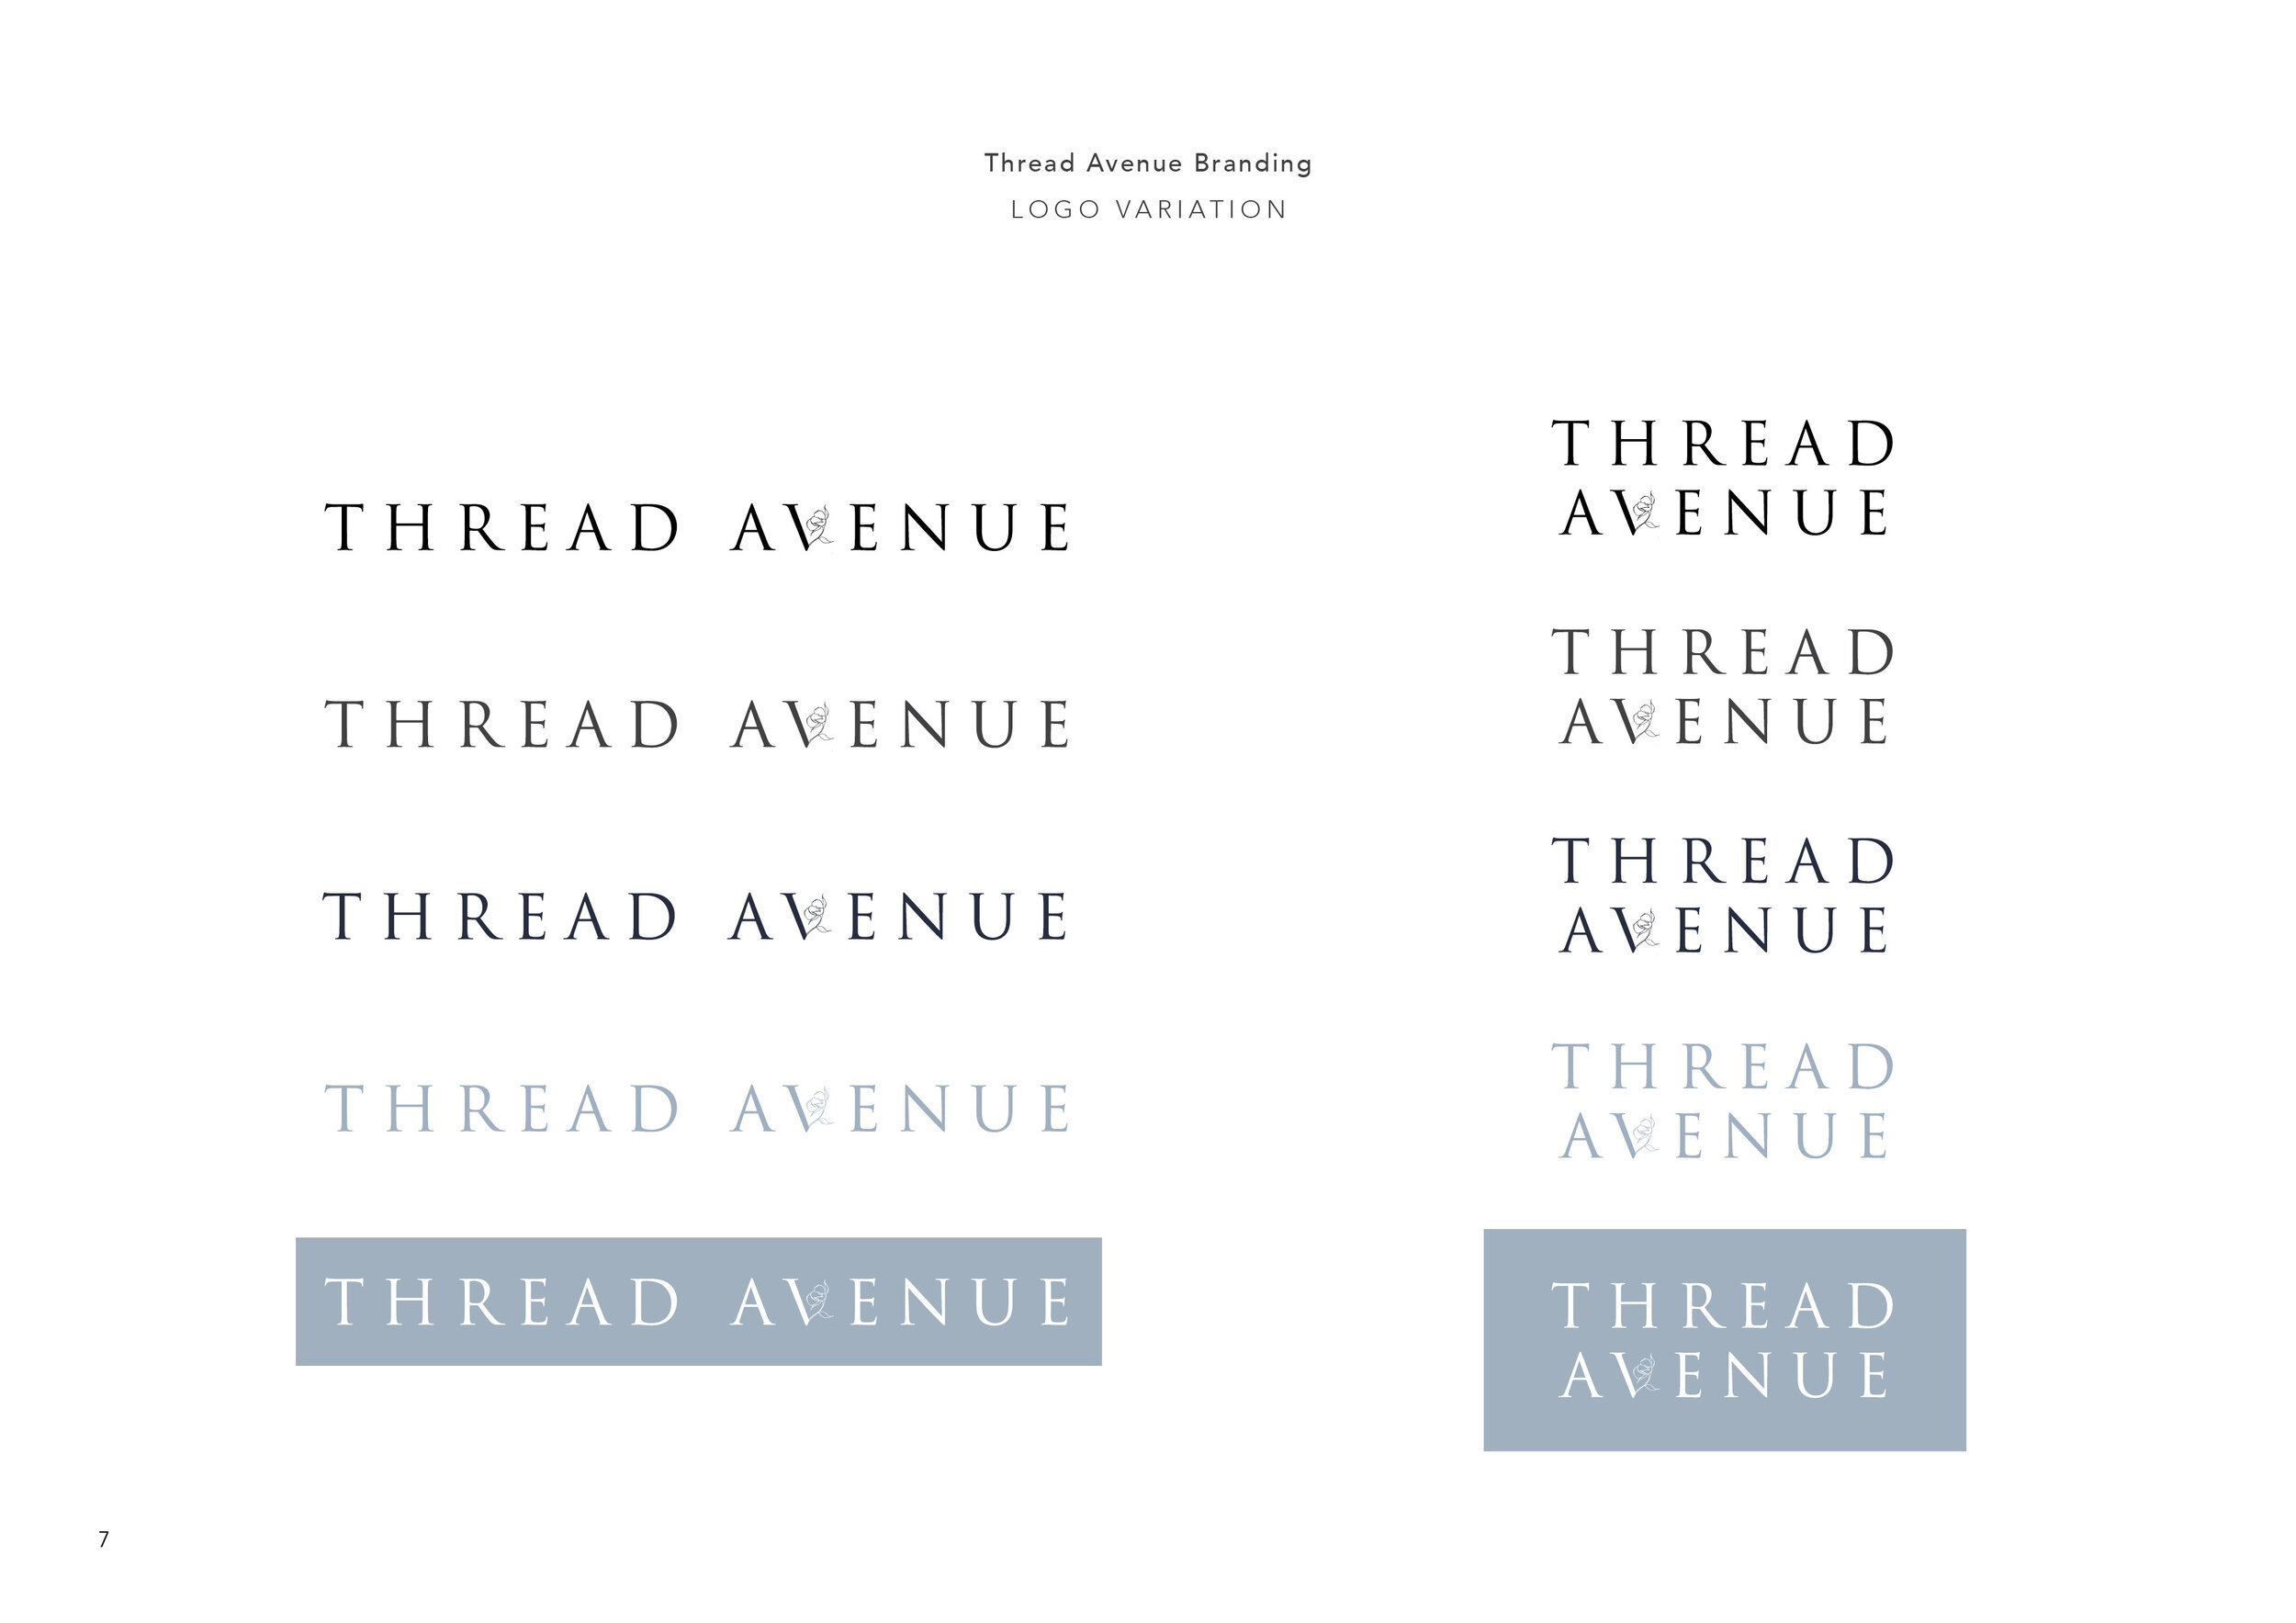 Thread Avenue Brand Guidelines7.jpg